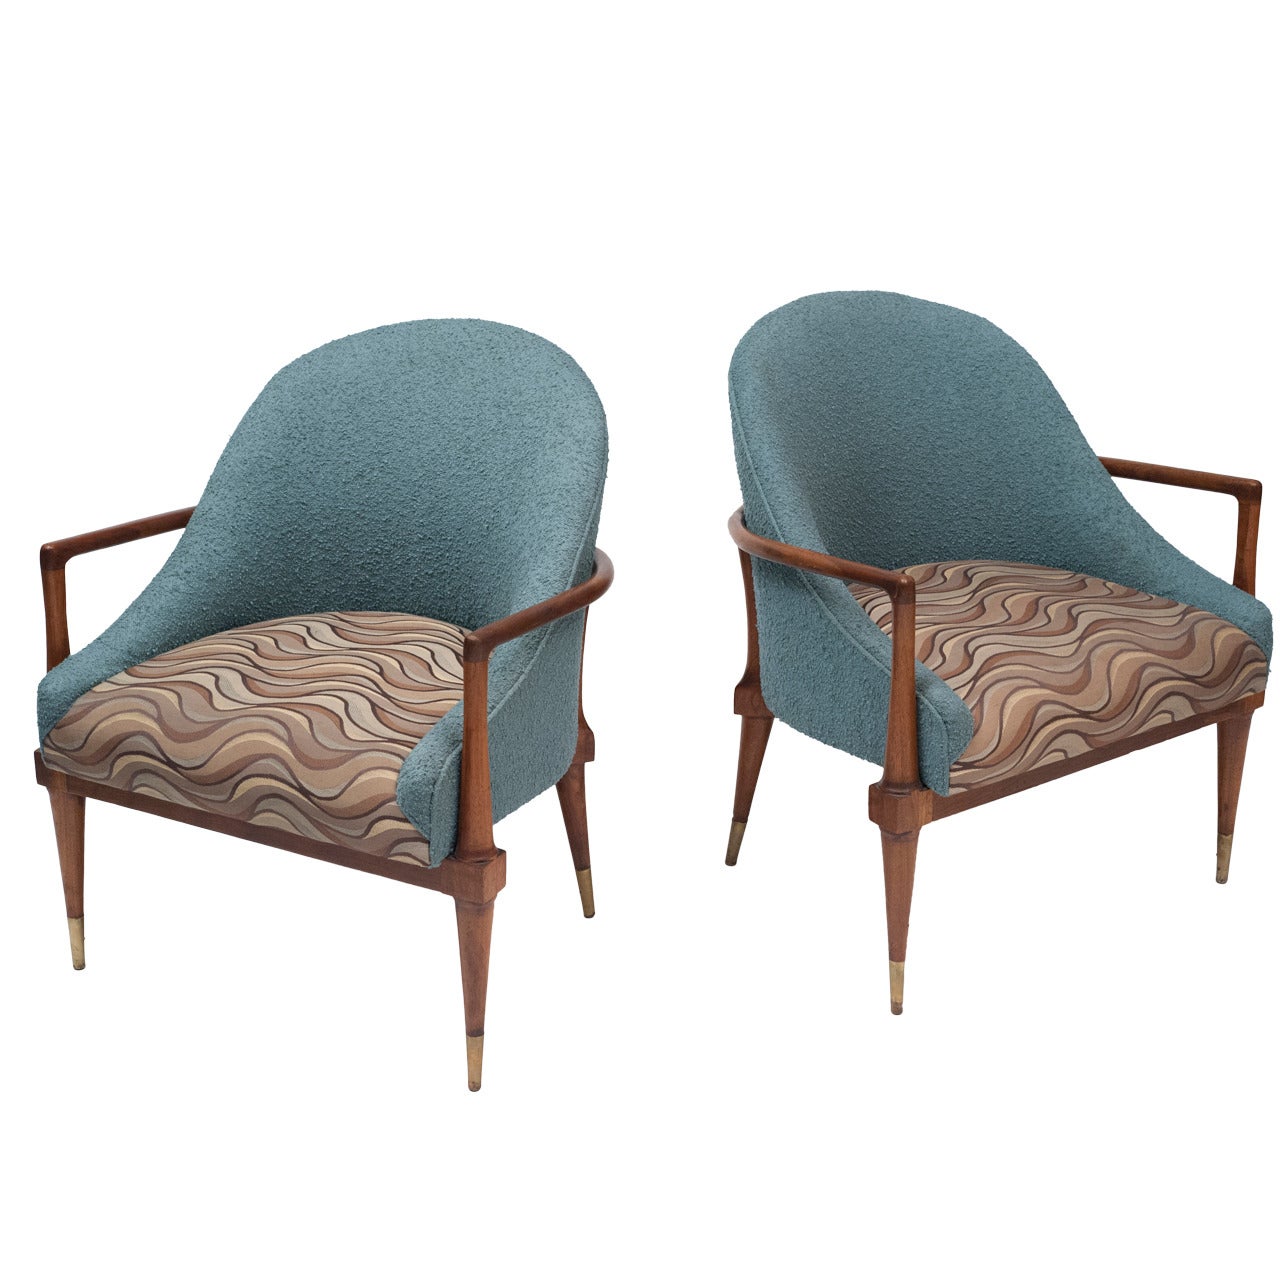 Classic Mid-Century Modern Lounge Chairs